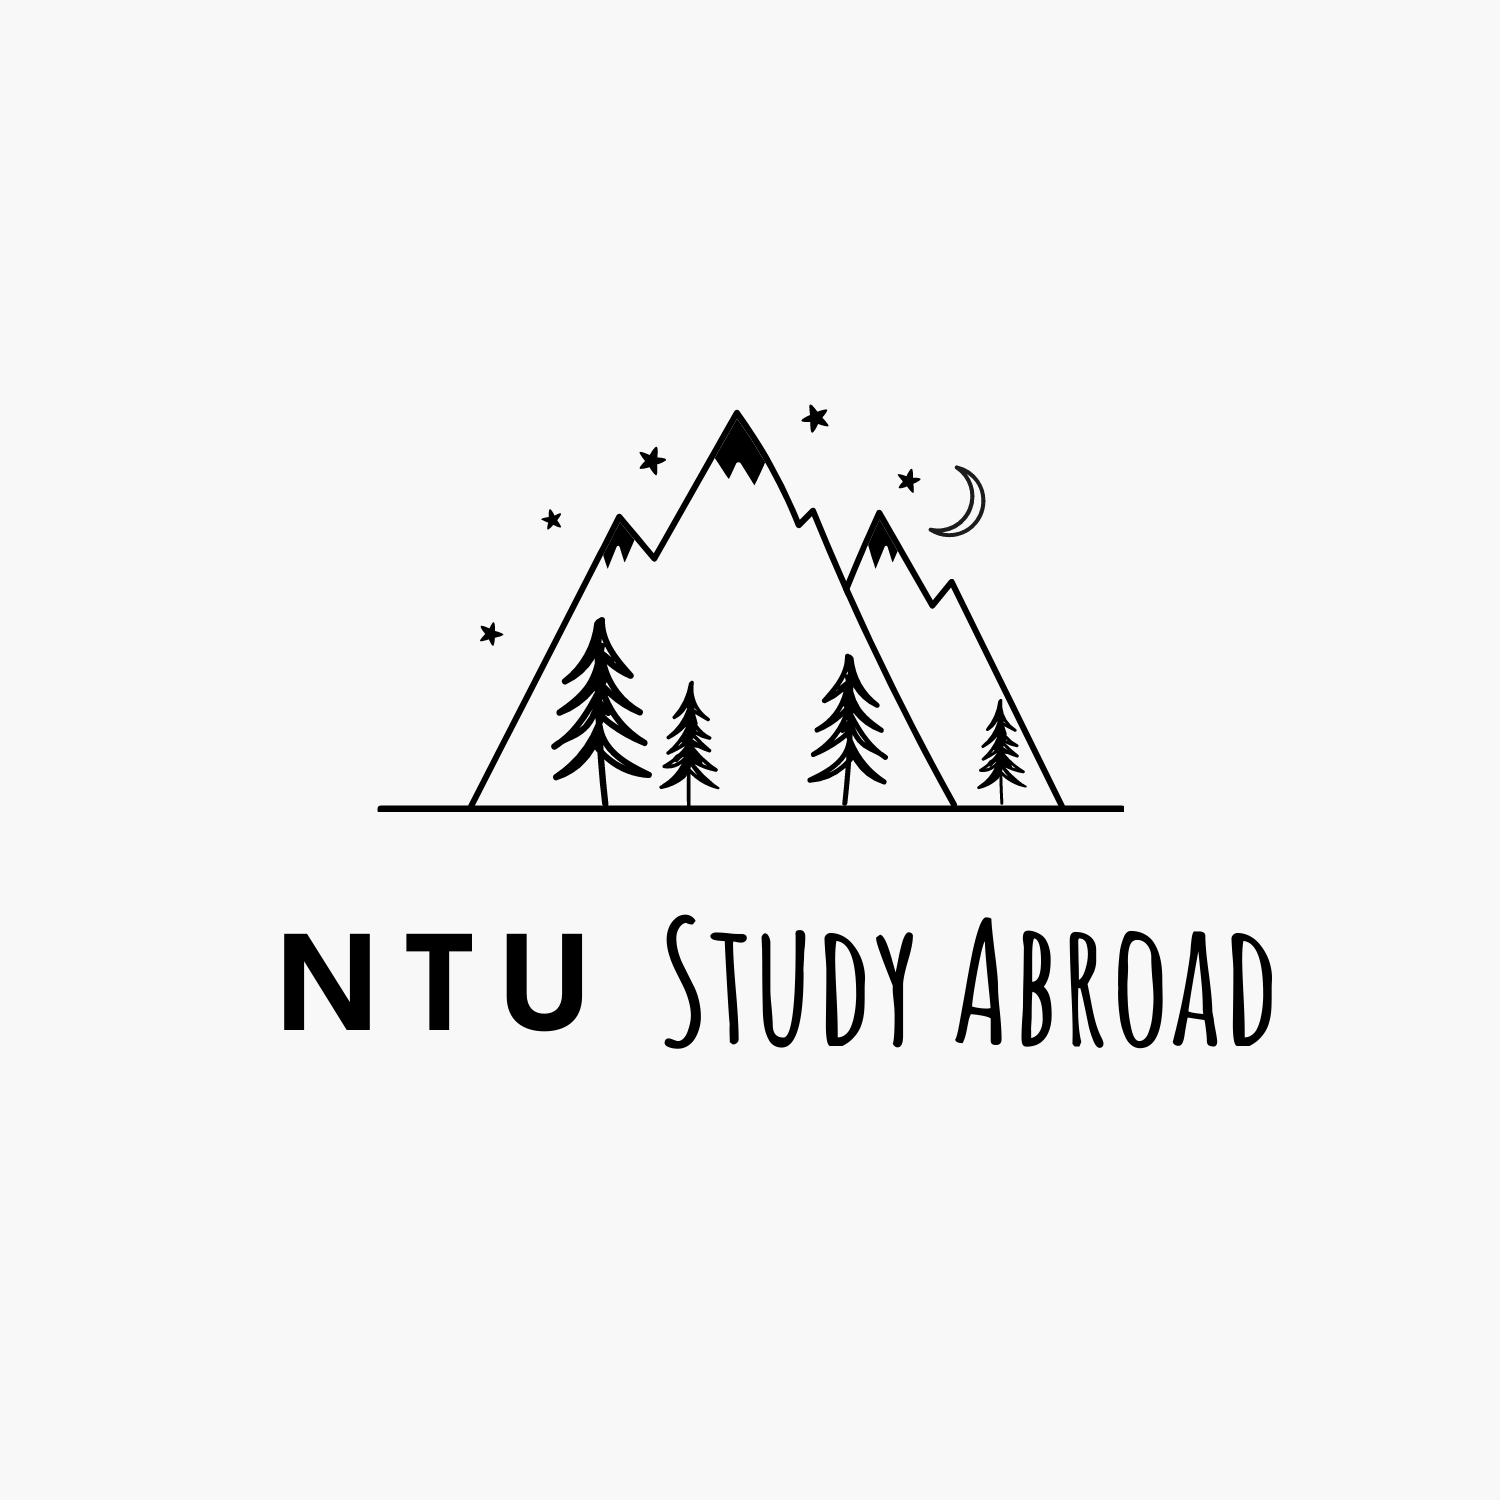 NTU Study Abroad